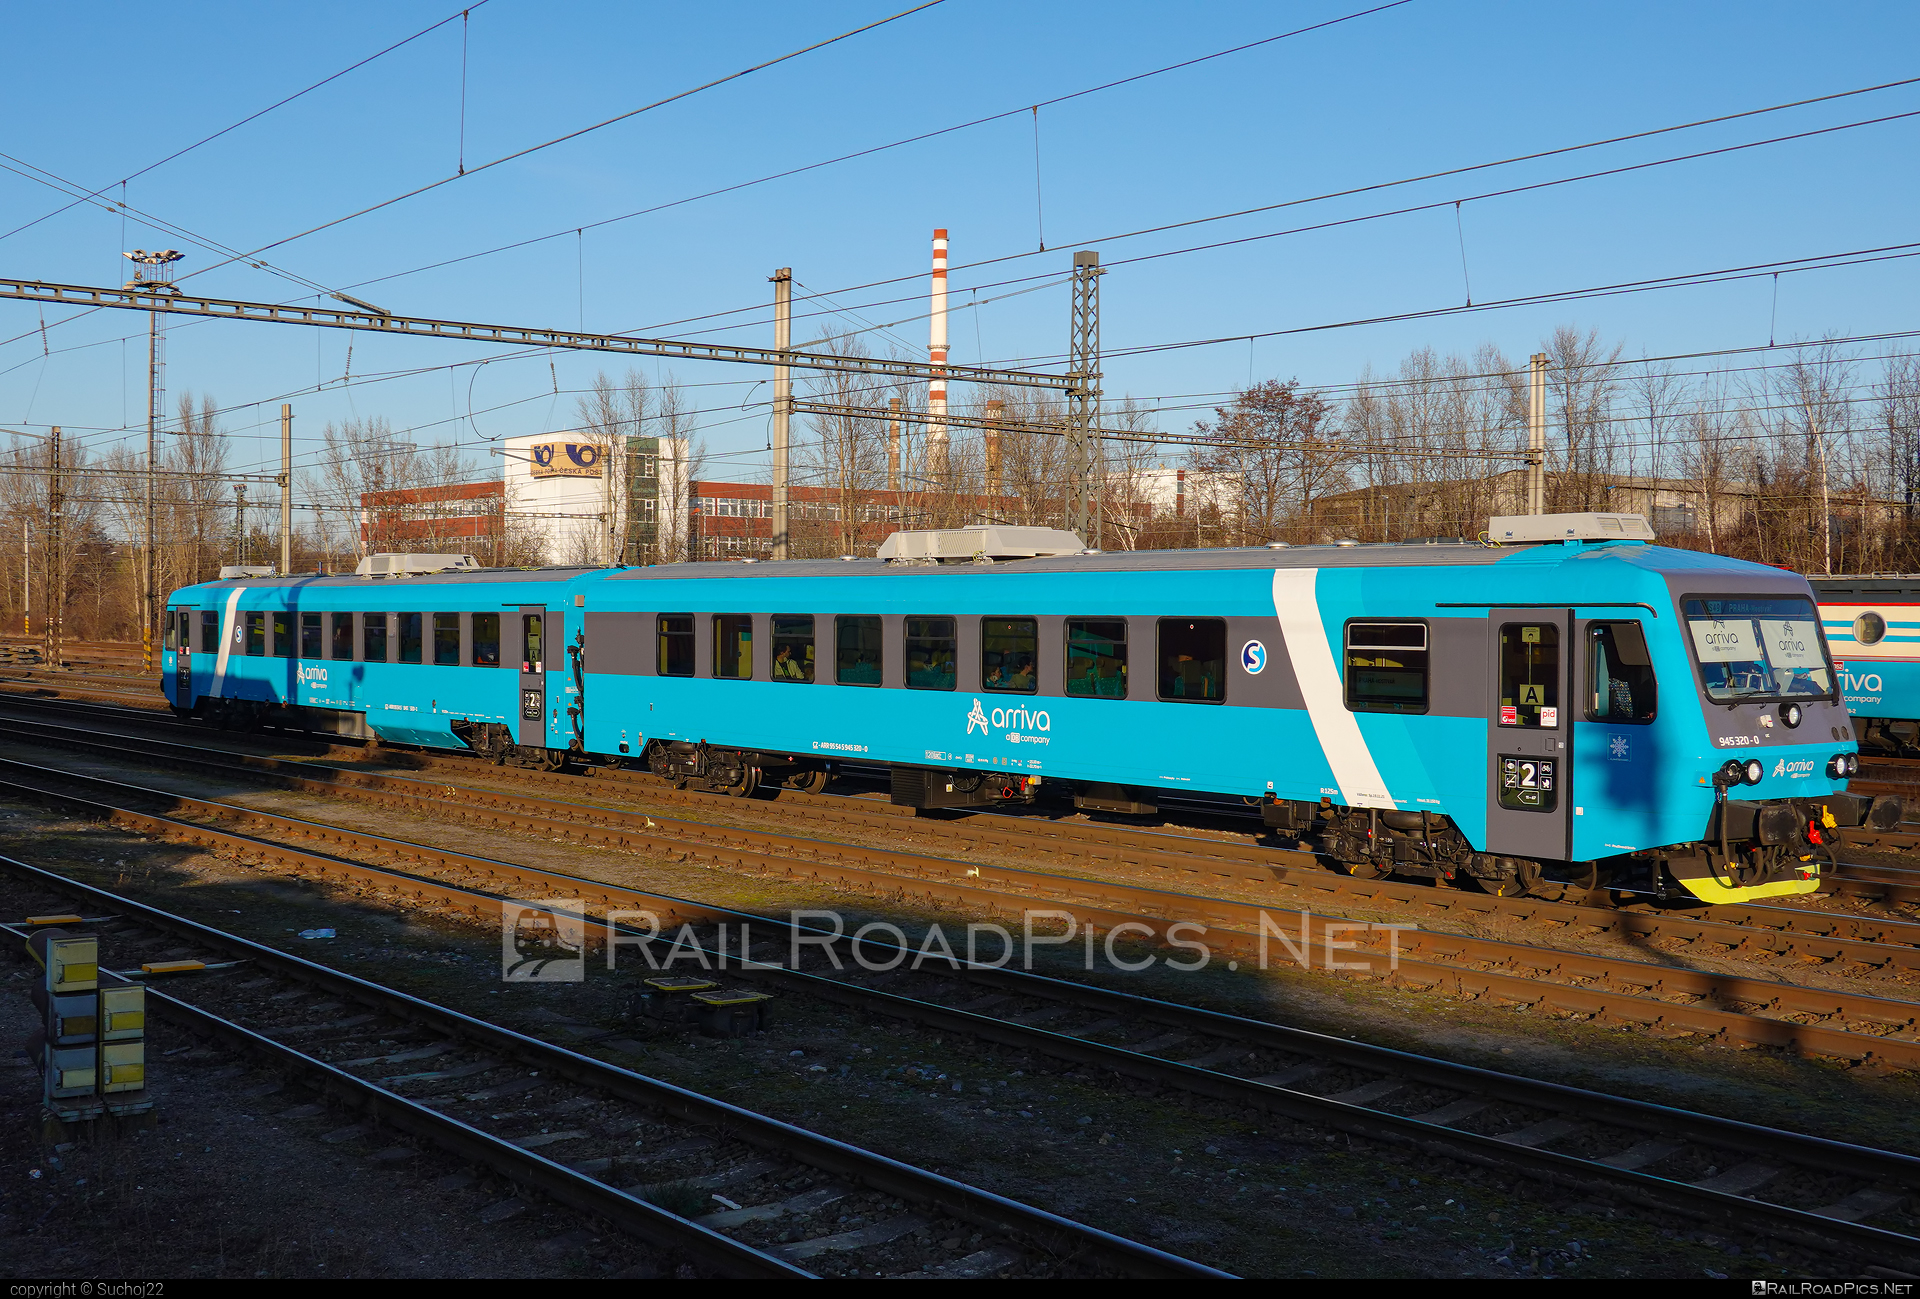 Düwag DB Class 628 - 945 320-0 operated by ARRIVA vlaky s.r.o. #arriva #arrivavlaky #arrivavlakysro #dbclass628 #duewag #duewag628 #duwag #duwag628